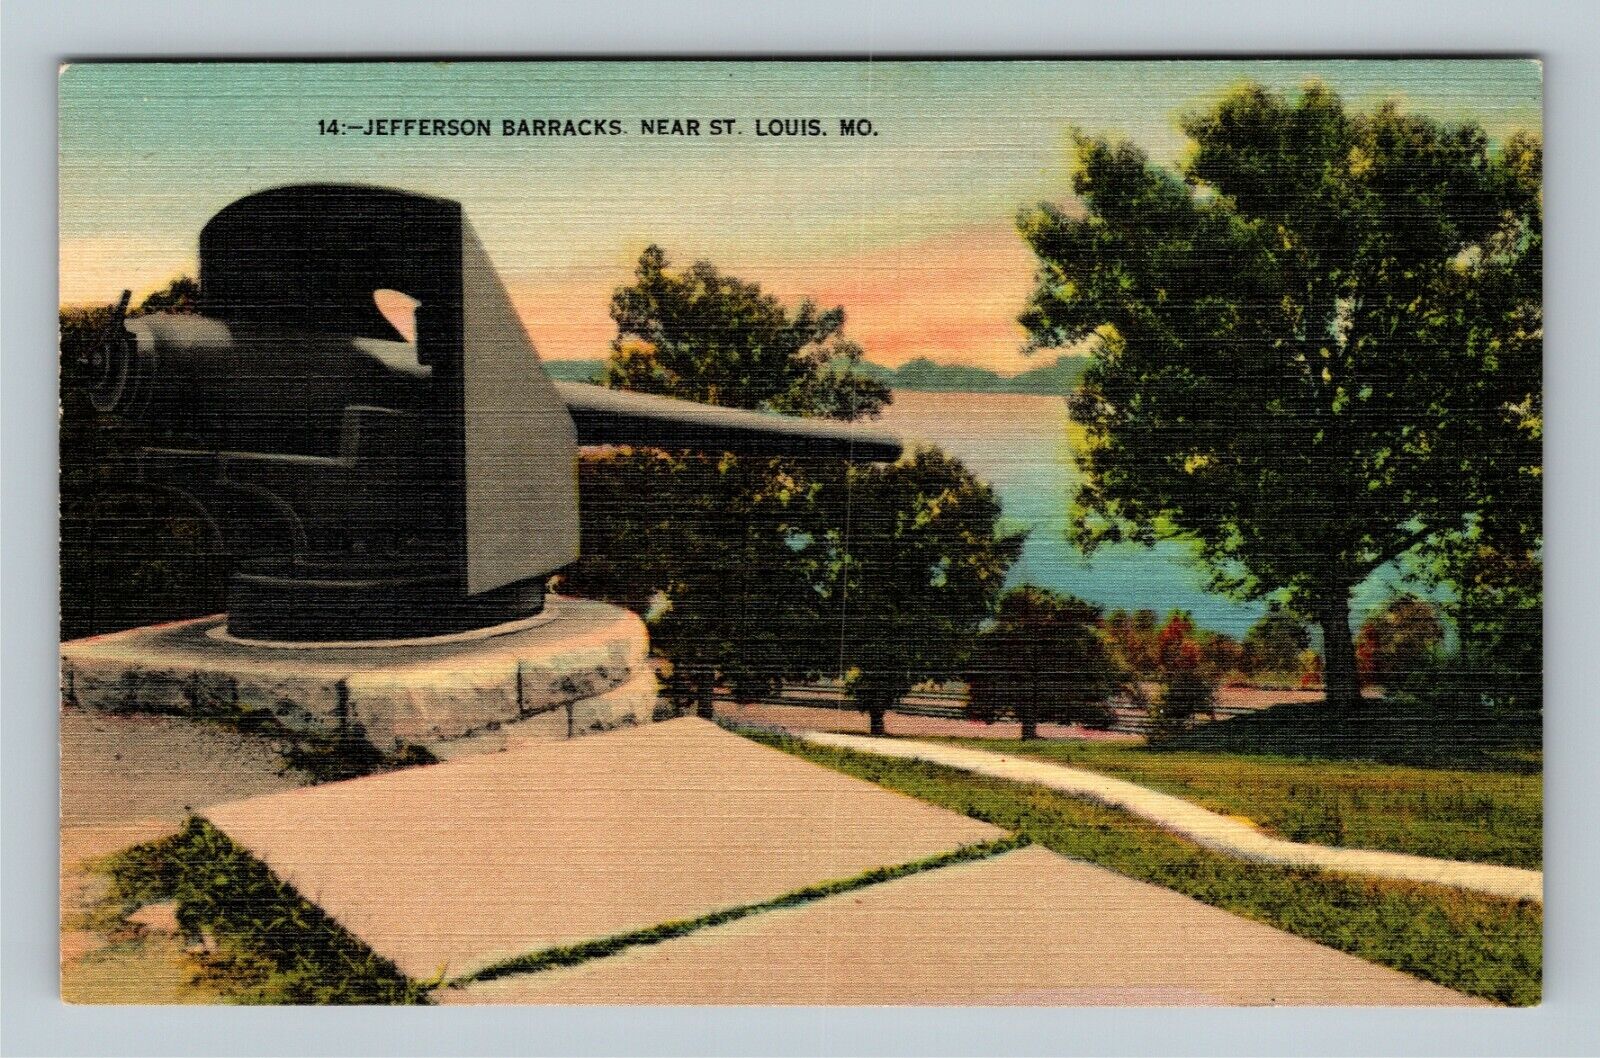 St Louis MO, Jefferson Barracks, Missouri Vintage Postcard